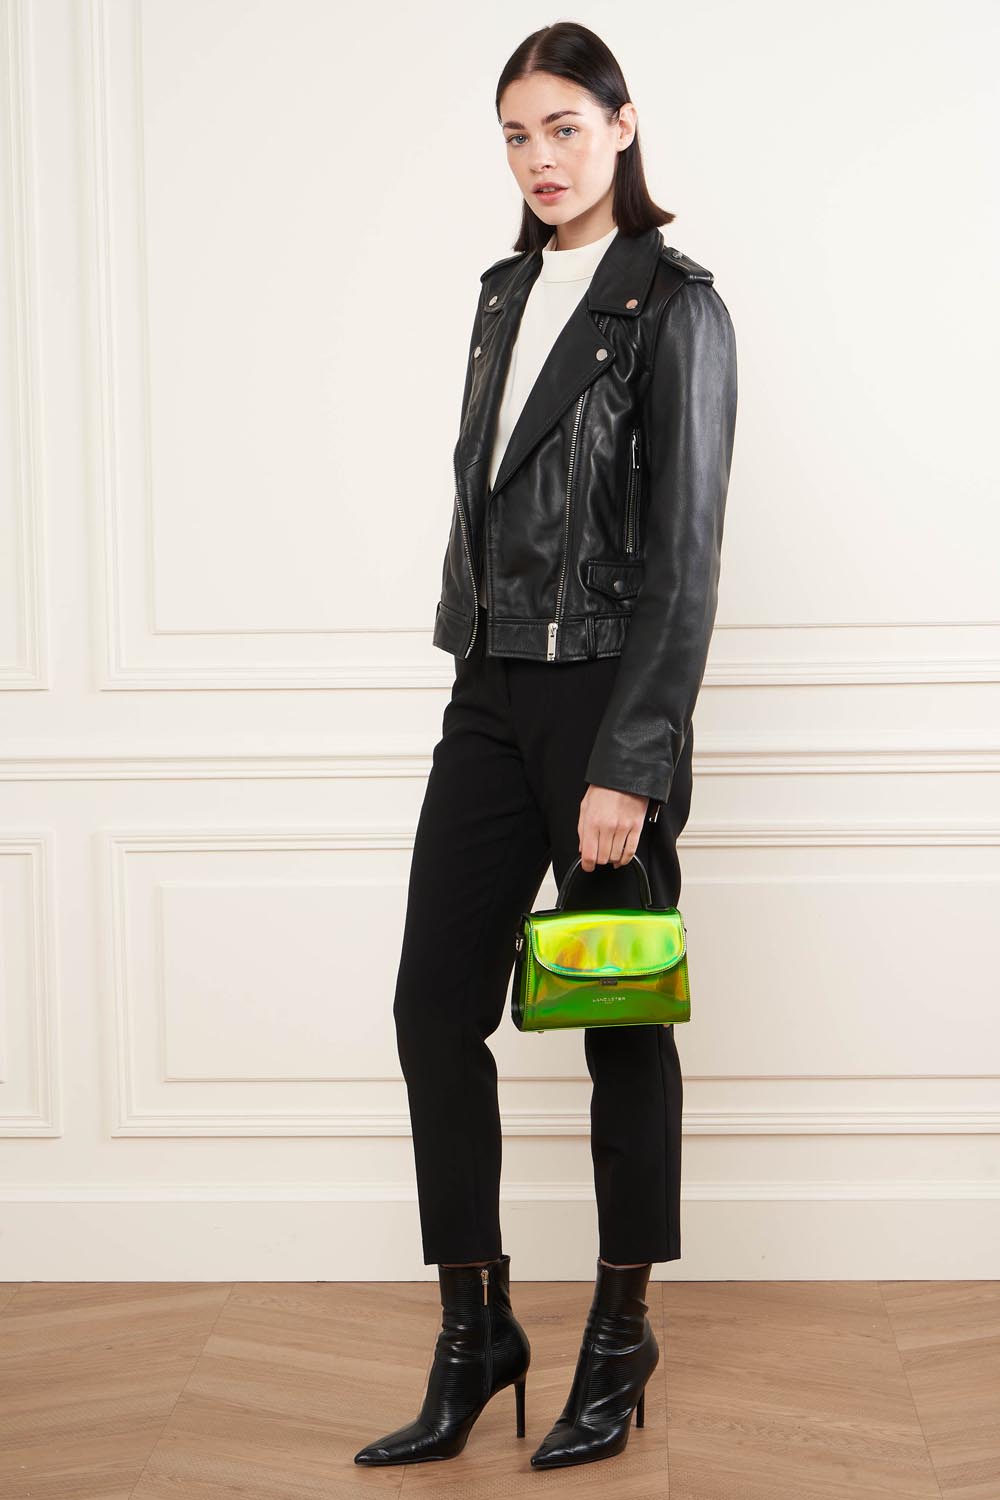 handbag - glass irio #couleur_vert